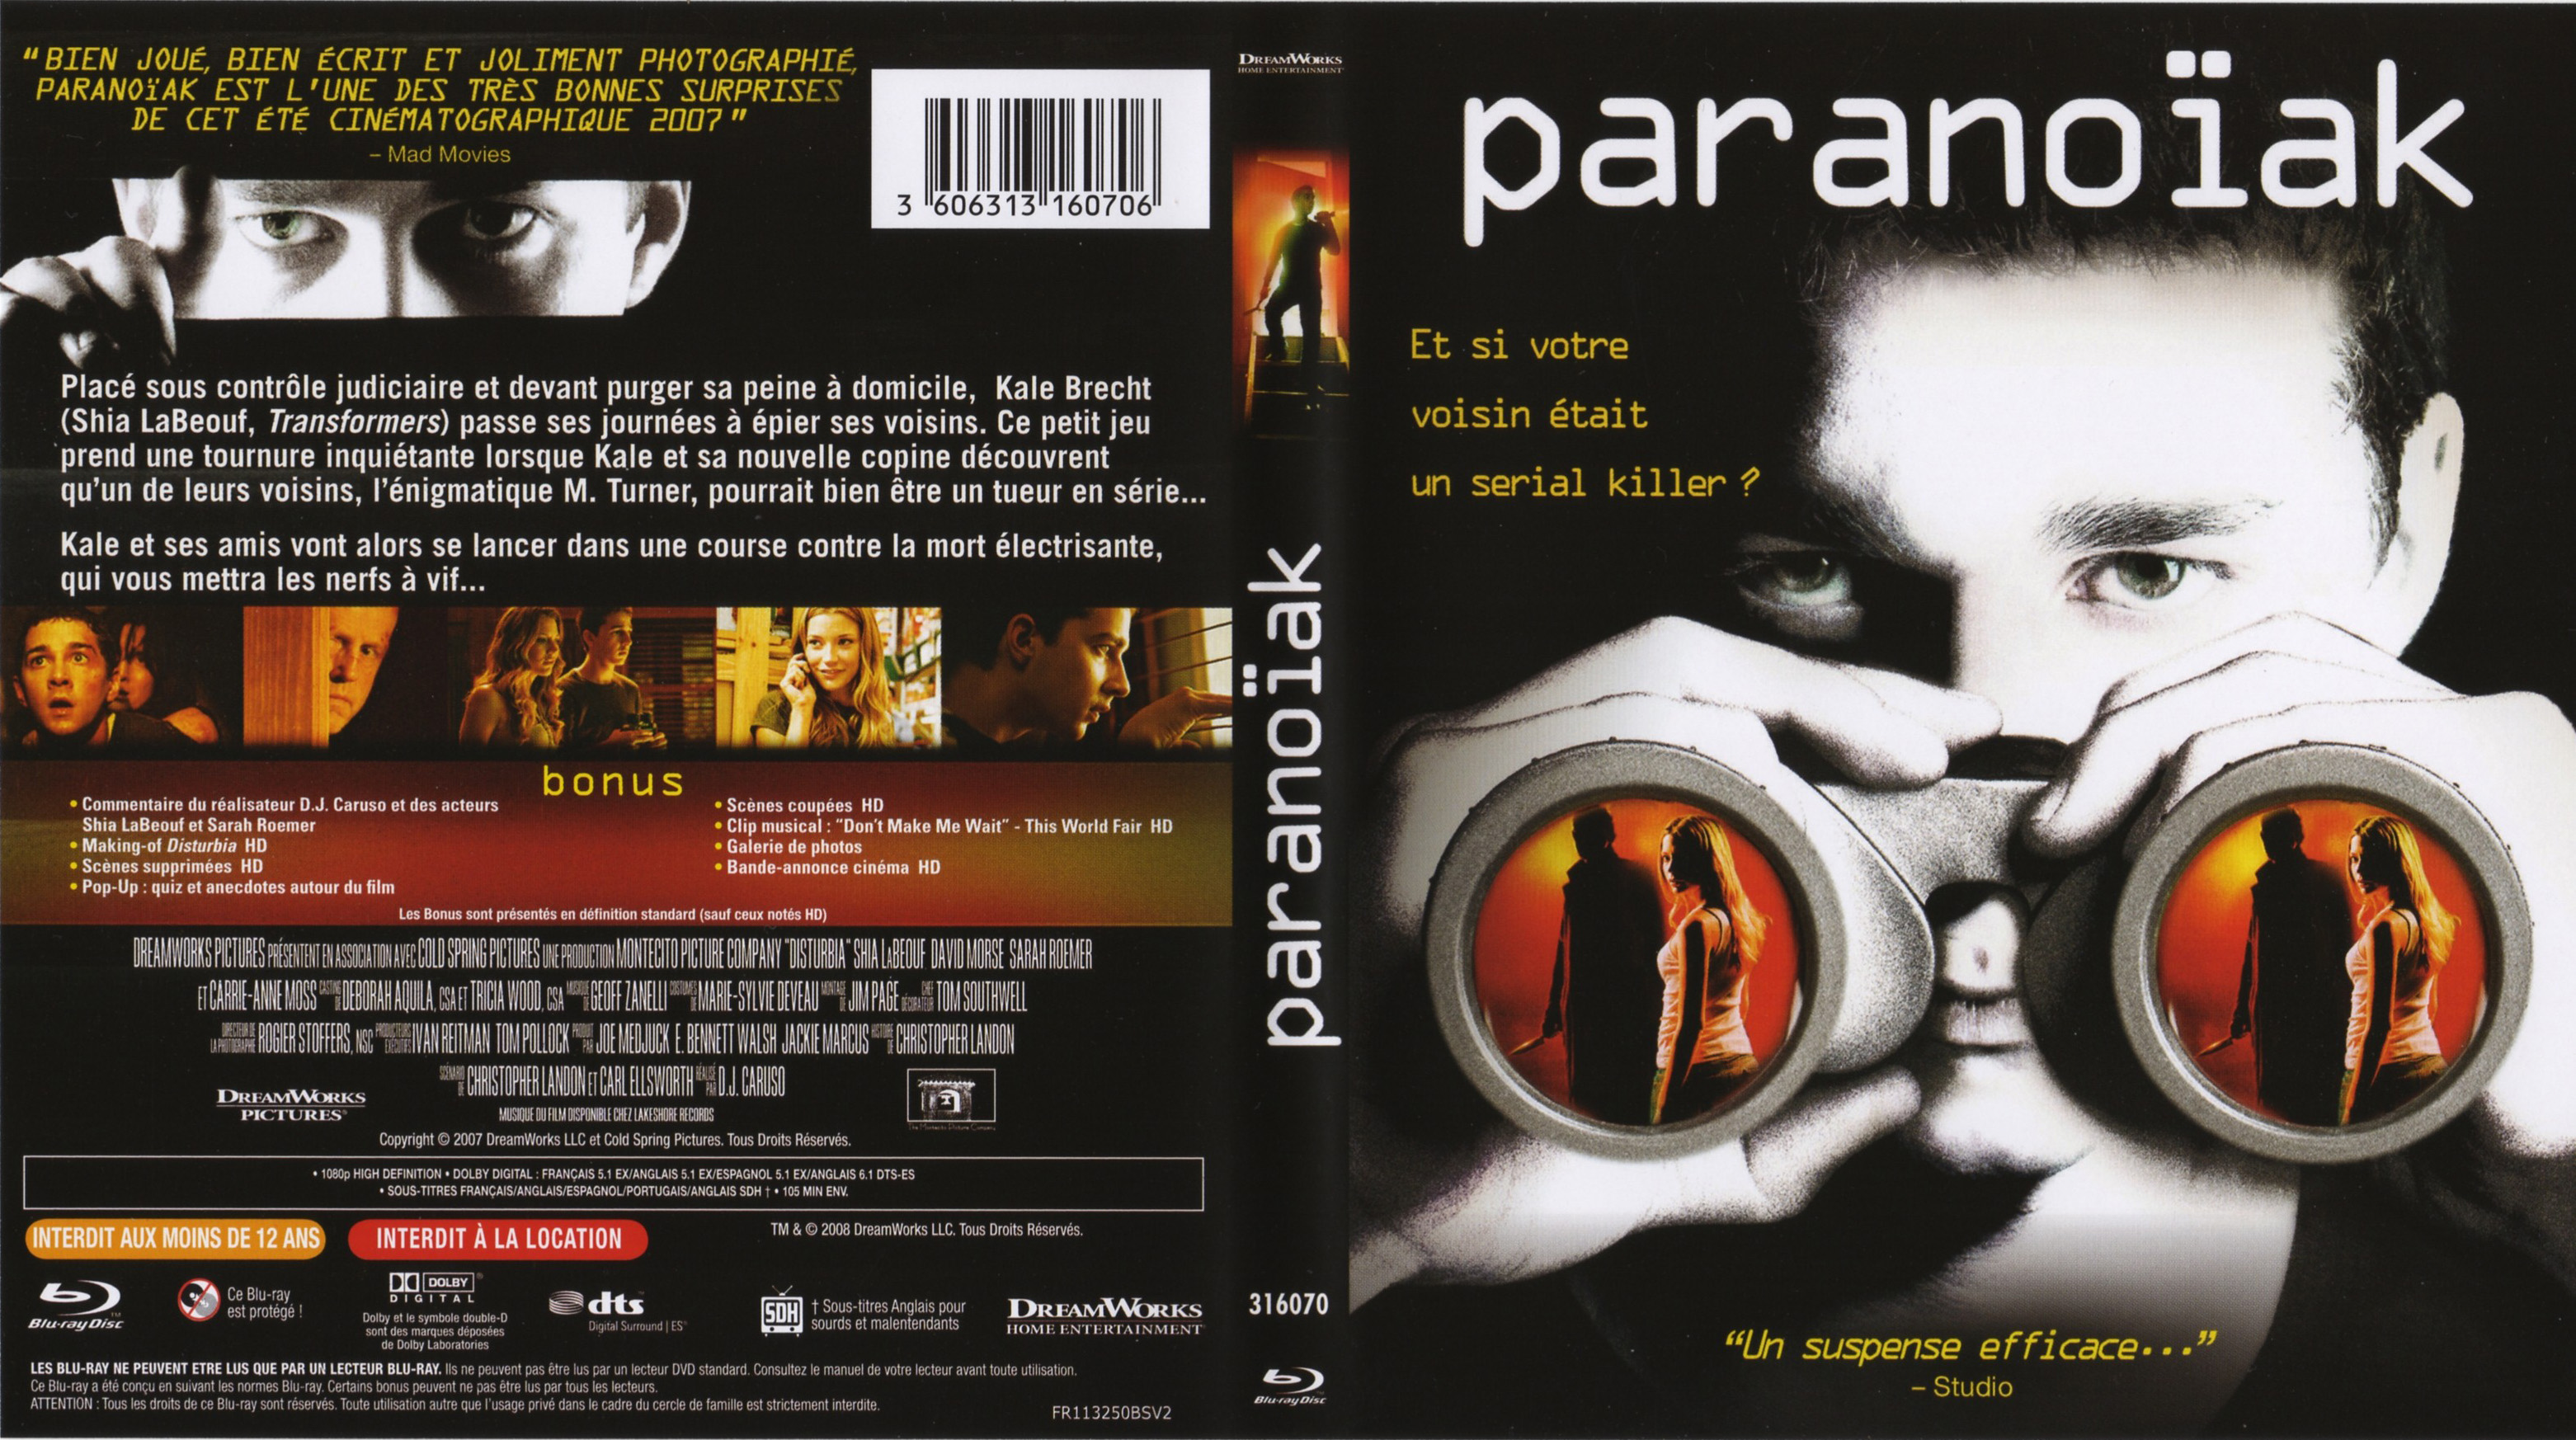 Jaquette DVD Paranoiak (BLU-RAY)